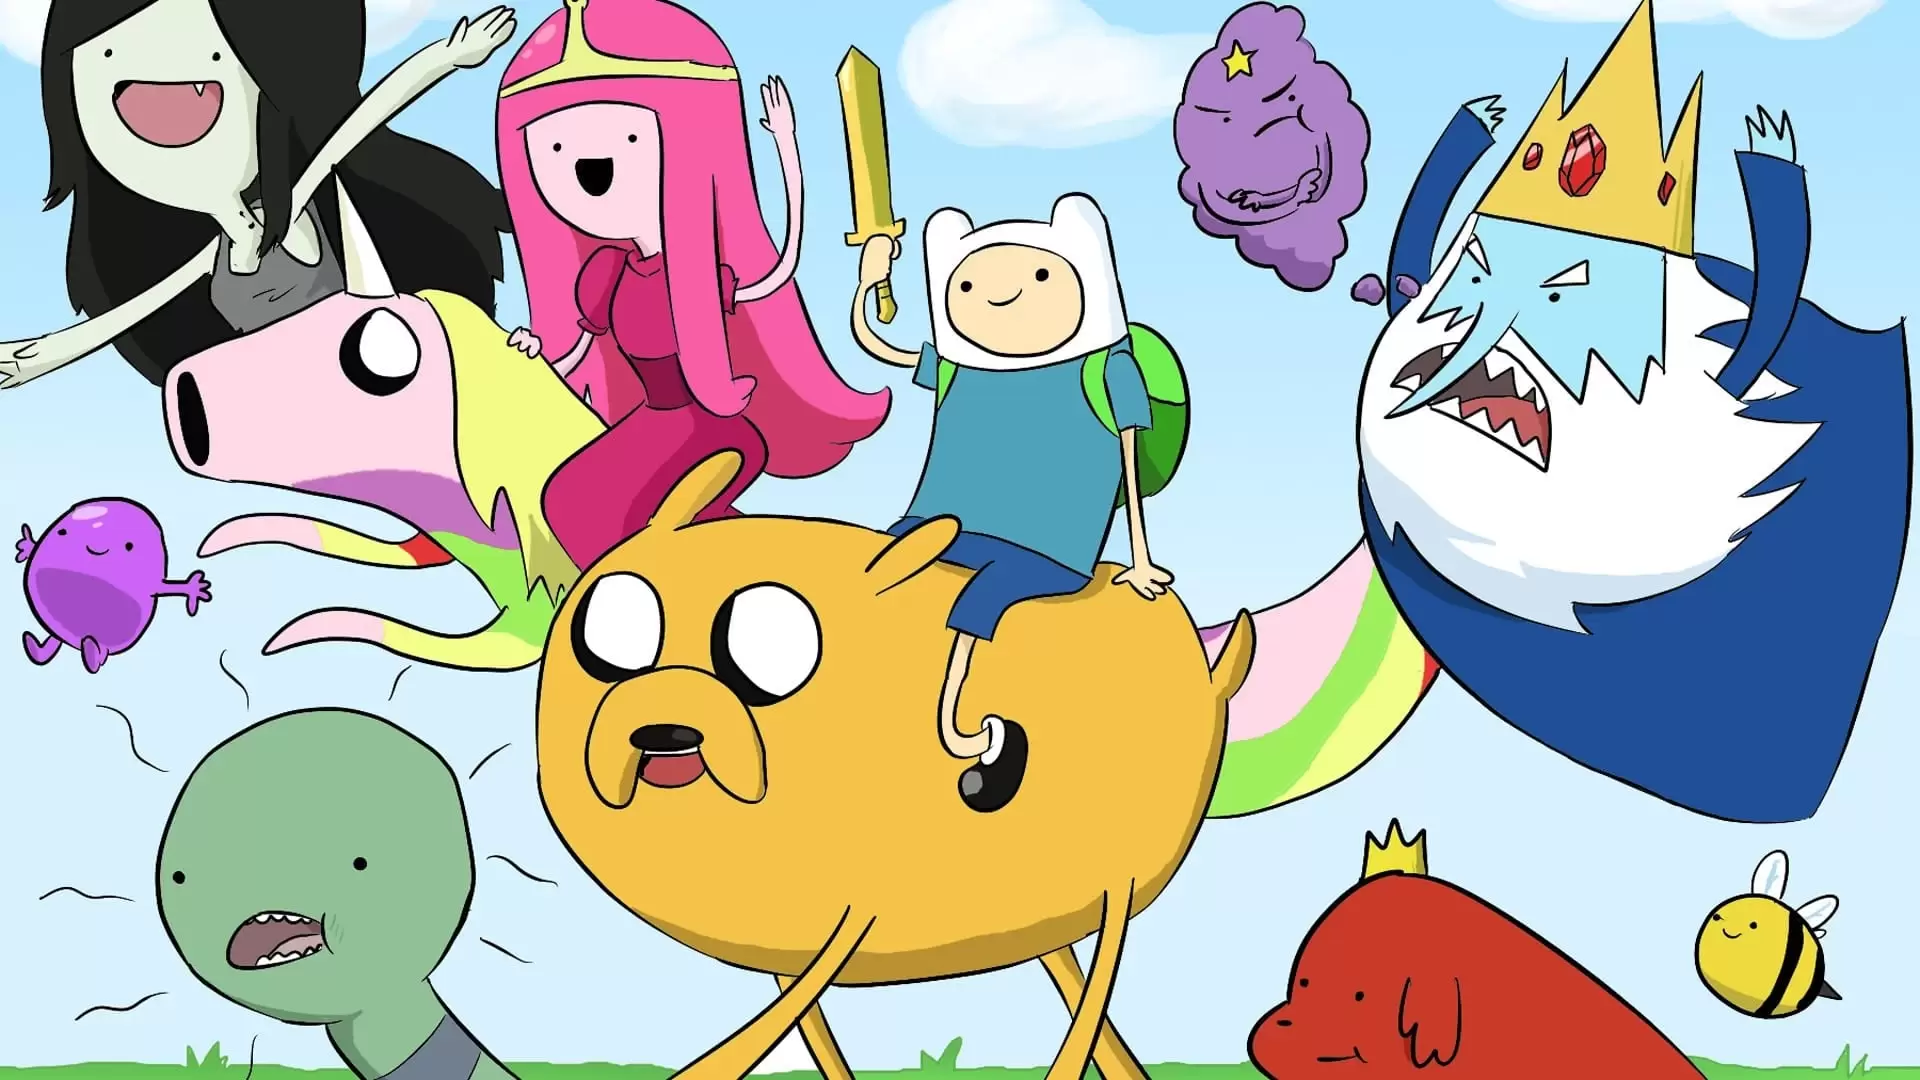 دانلود انیمیشن Adventure Time with Finn & Jake 2010 با تماشای آنلاین